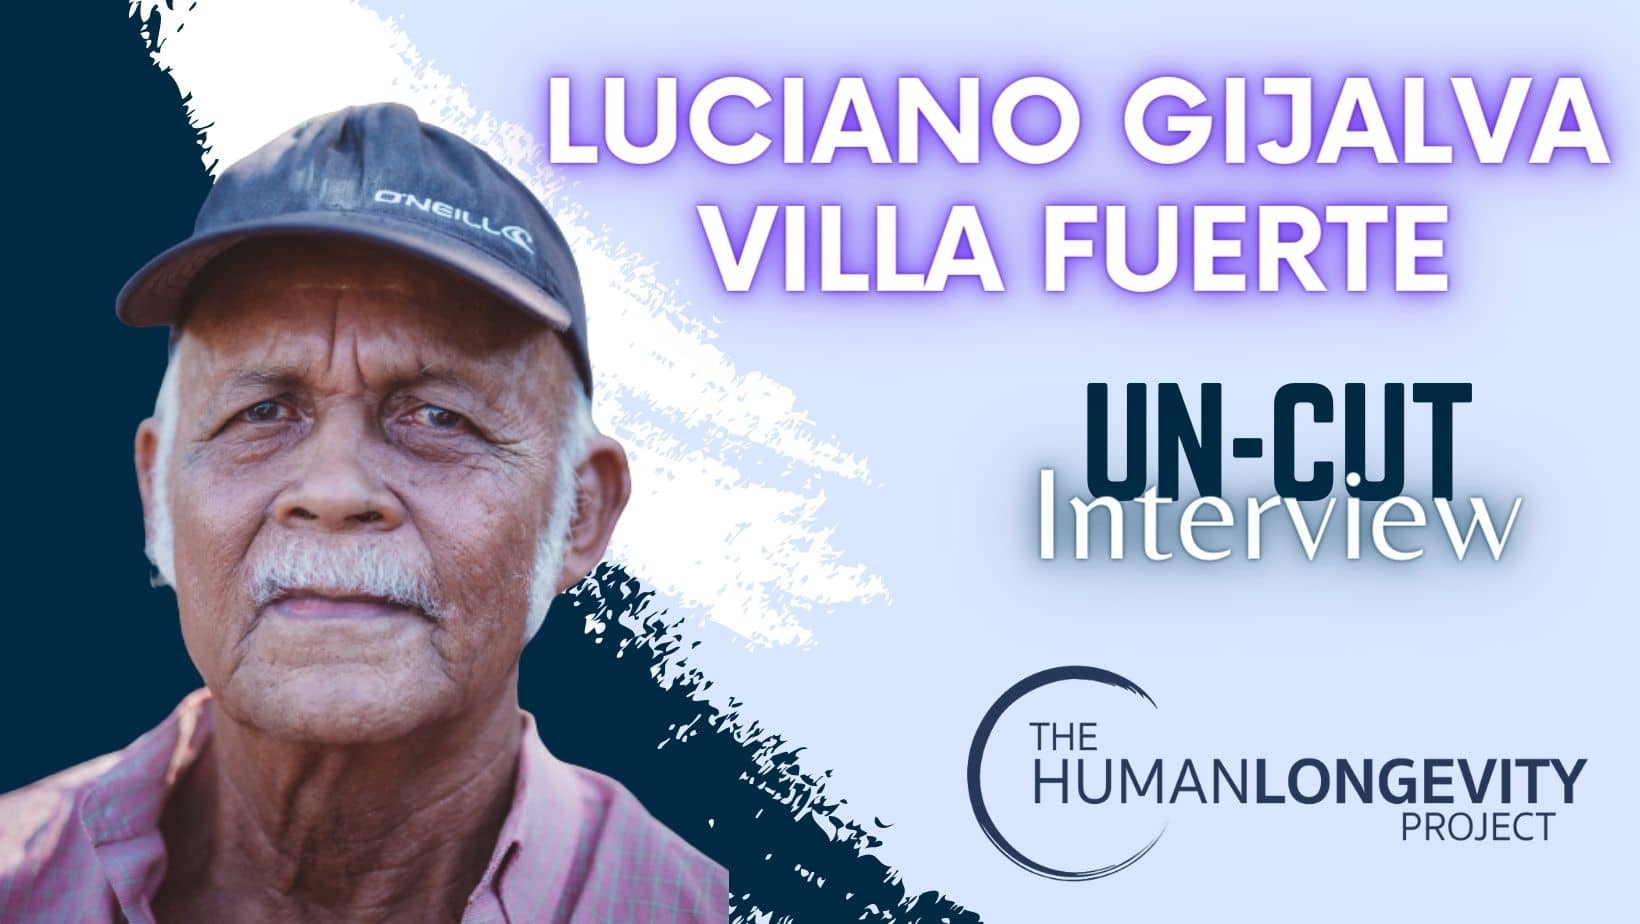 Human Longevity Project Uncut Interview With Luciano Gijalva Villa Fuerte